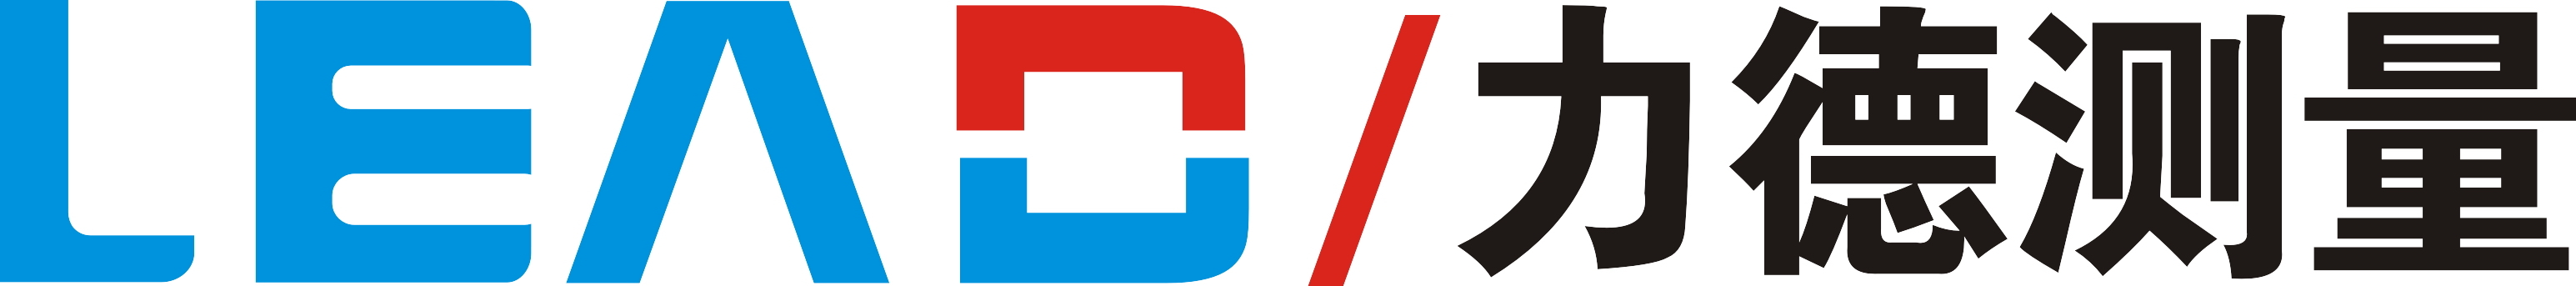 Lead Logo201911